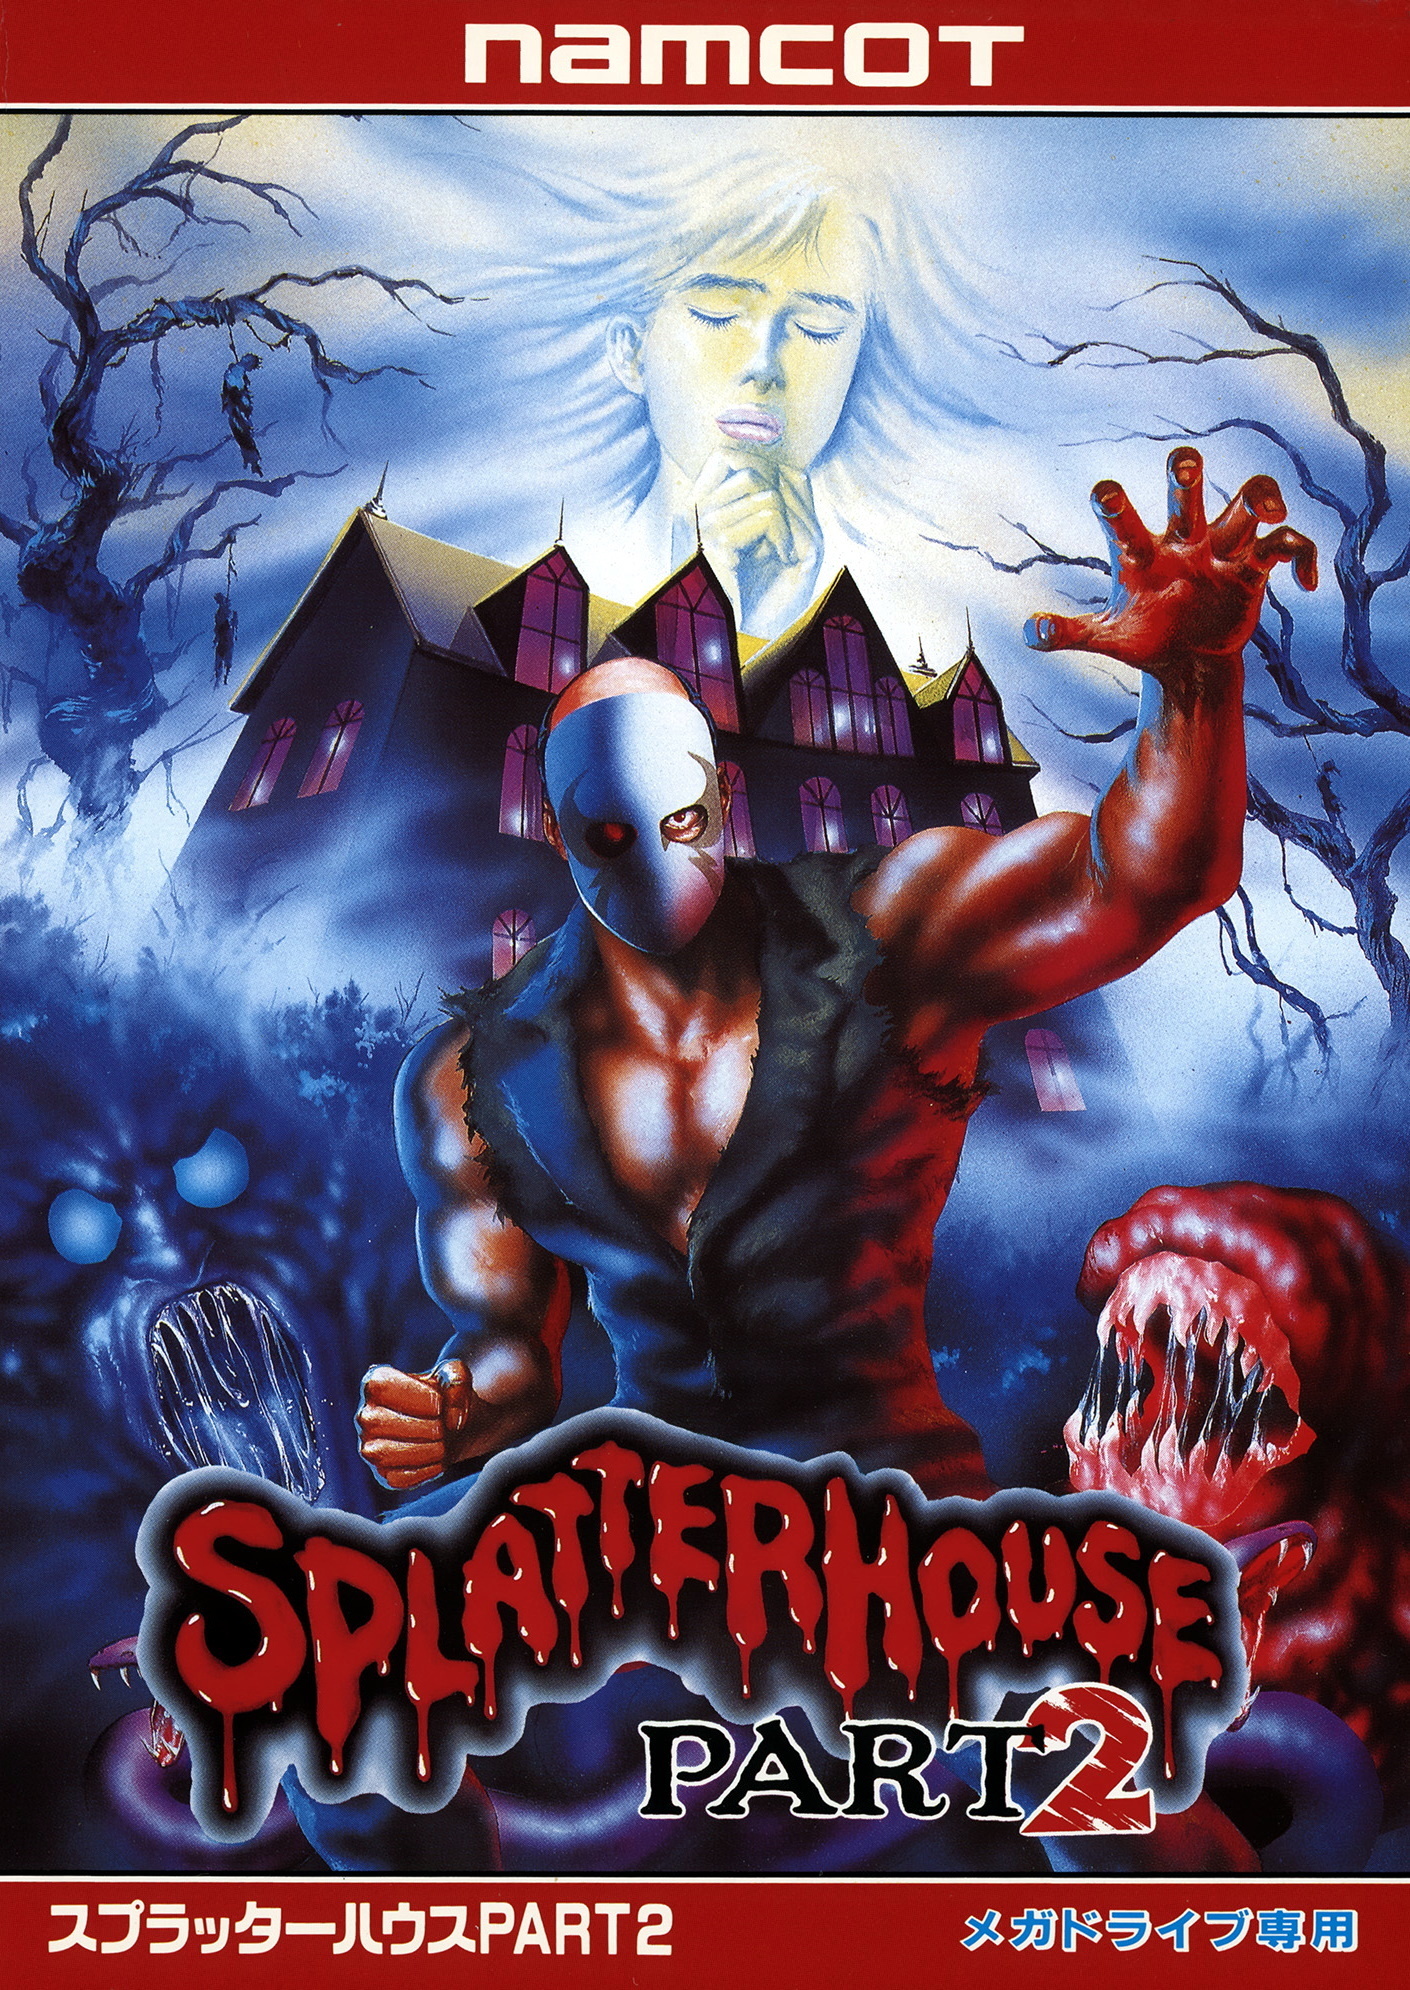 download splatterhouse 2010 video game